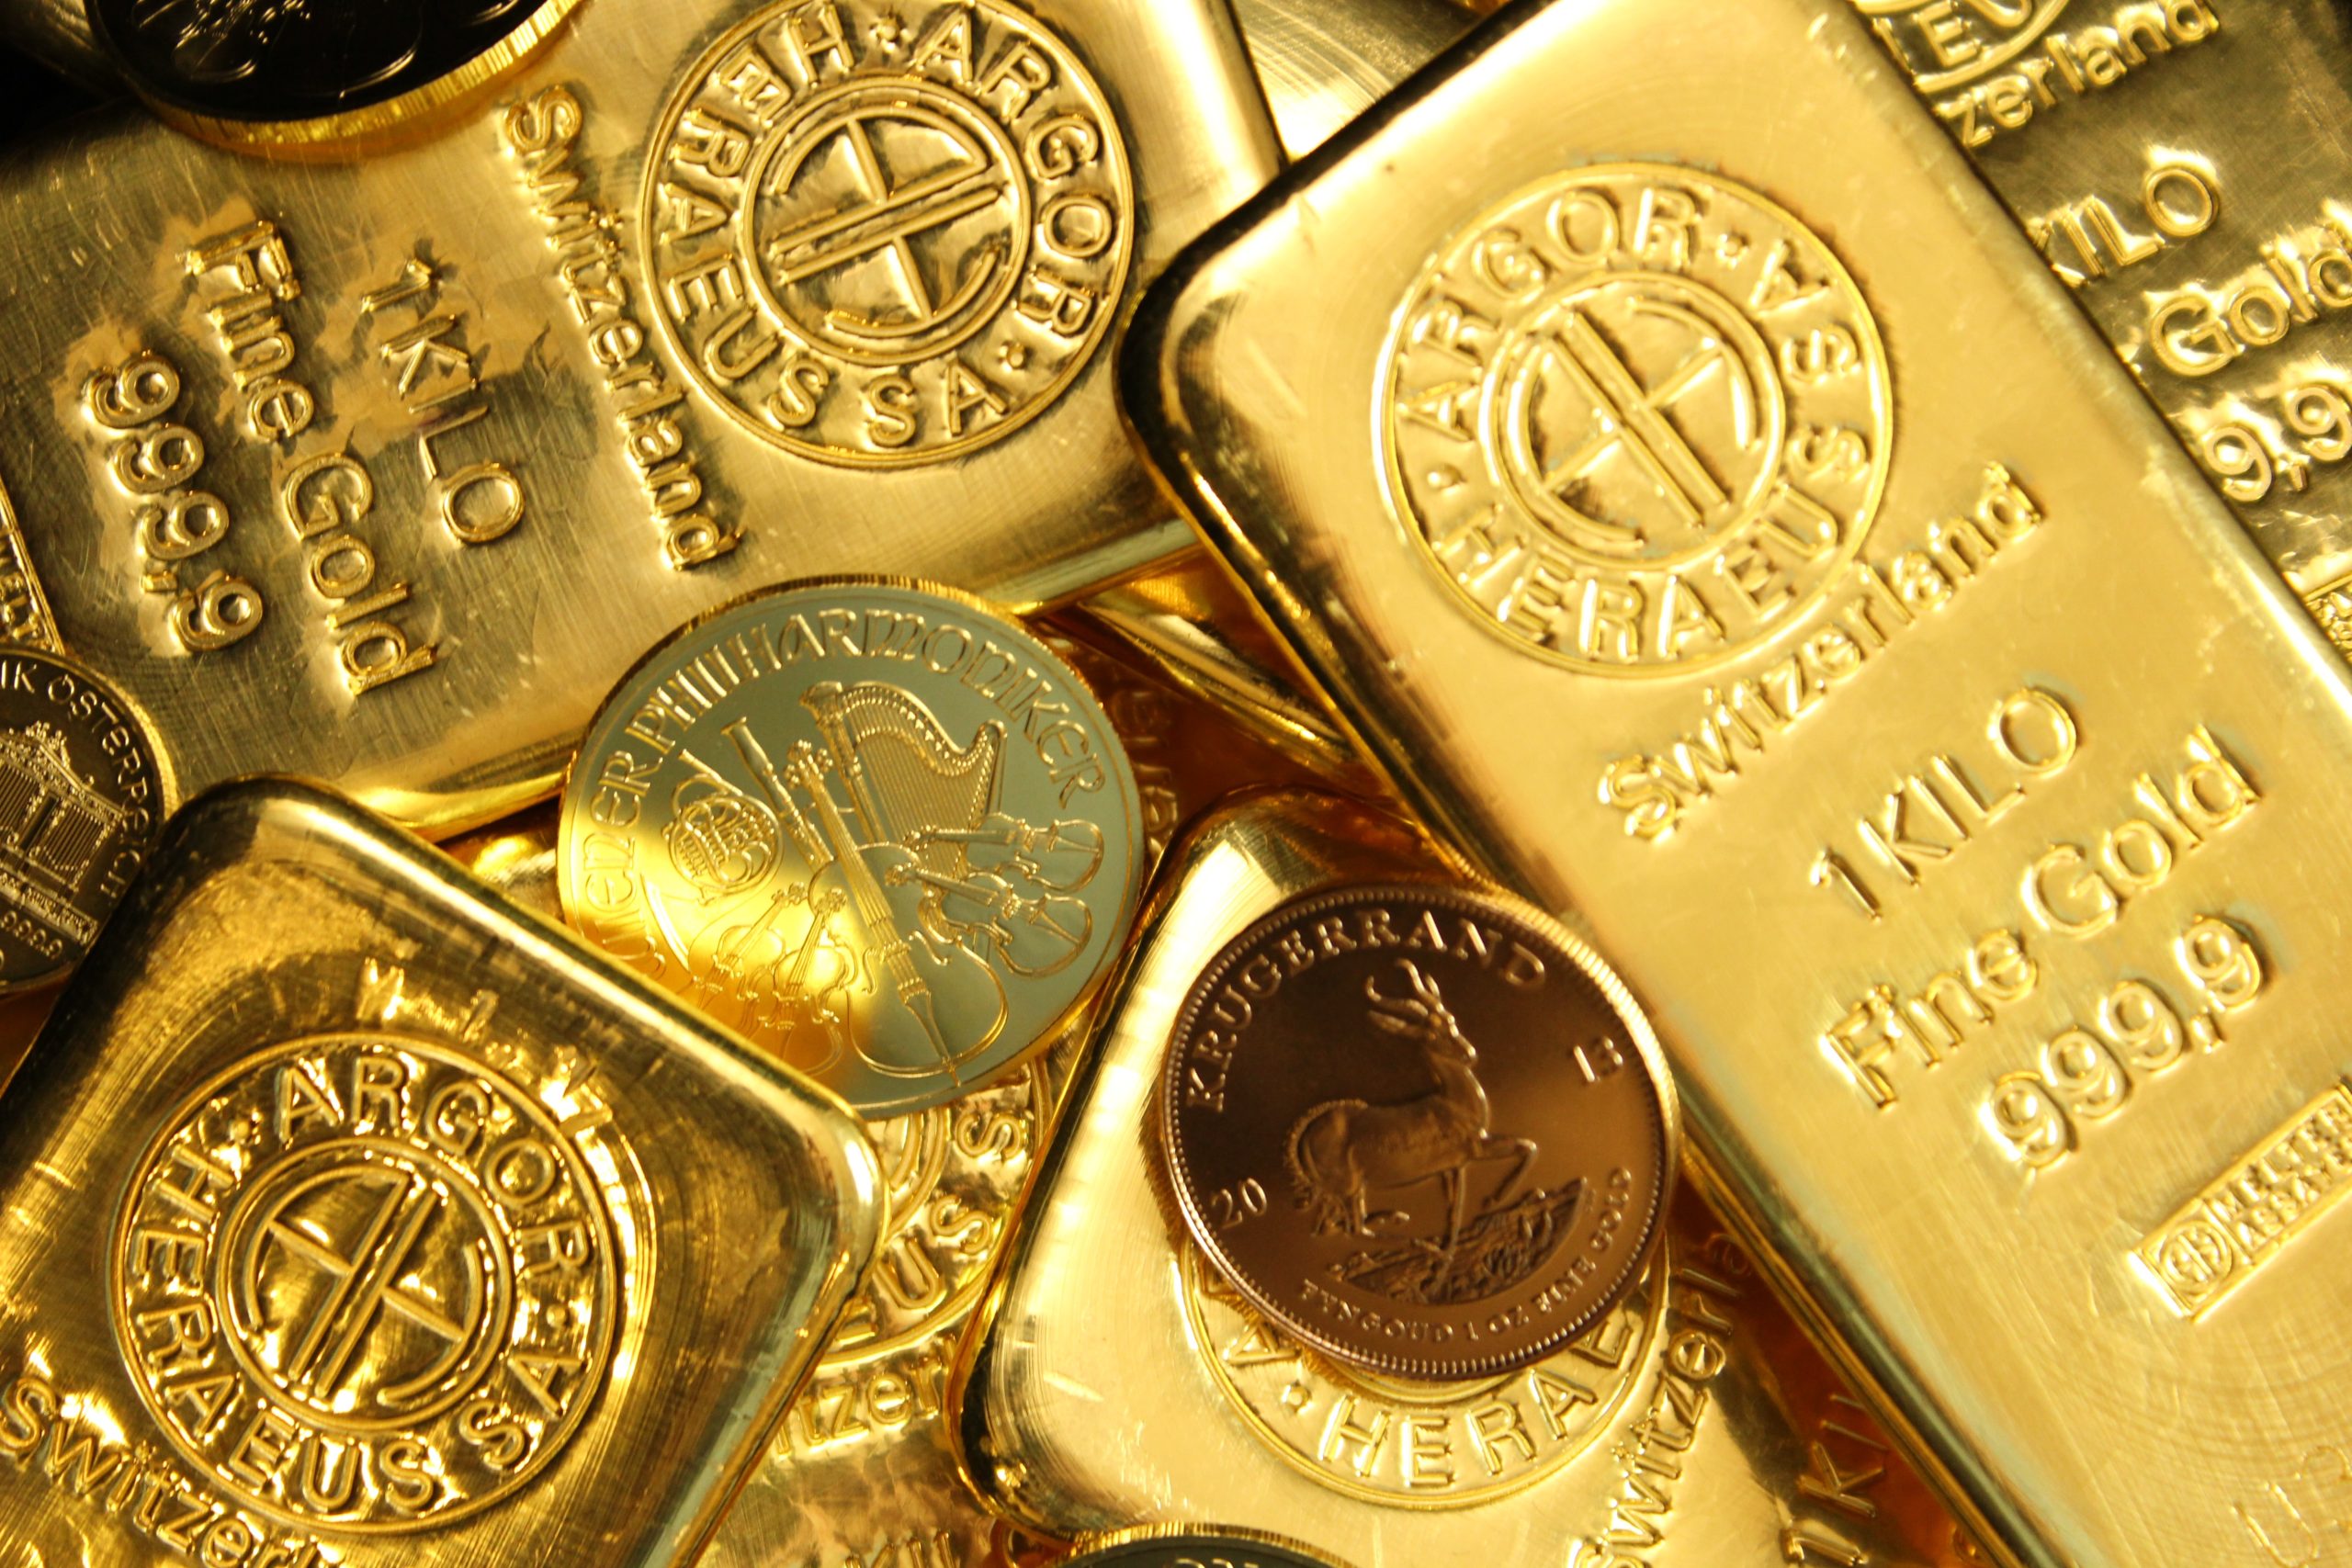 Buy Premium gold bars in Switzerland